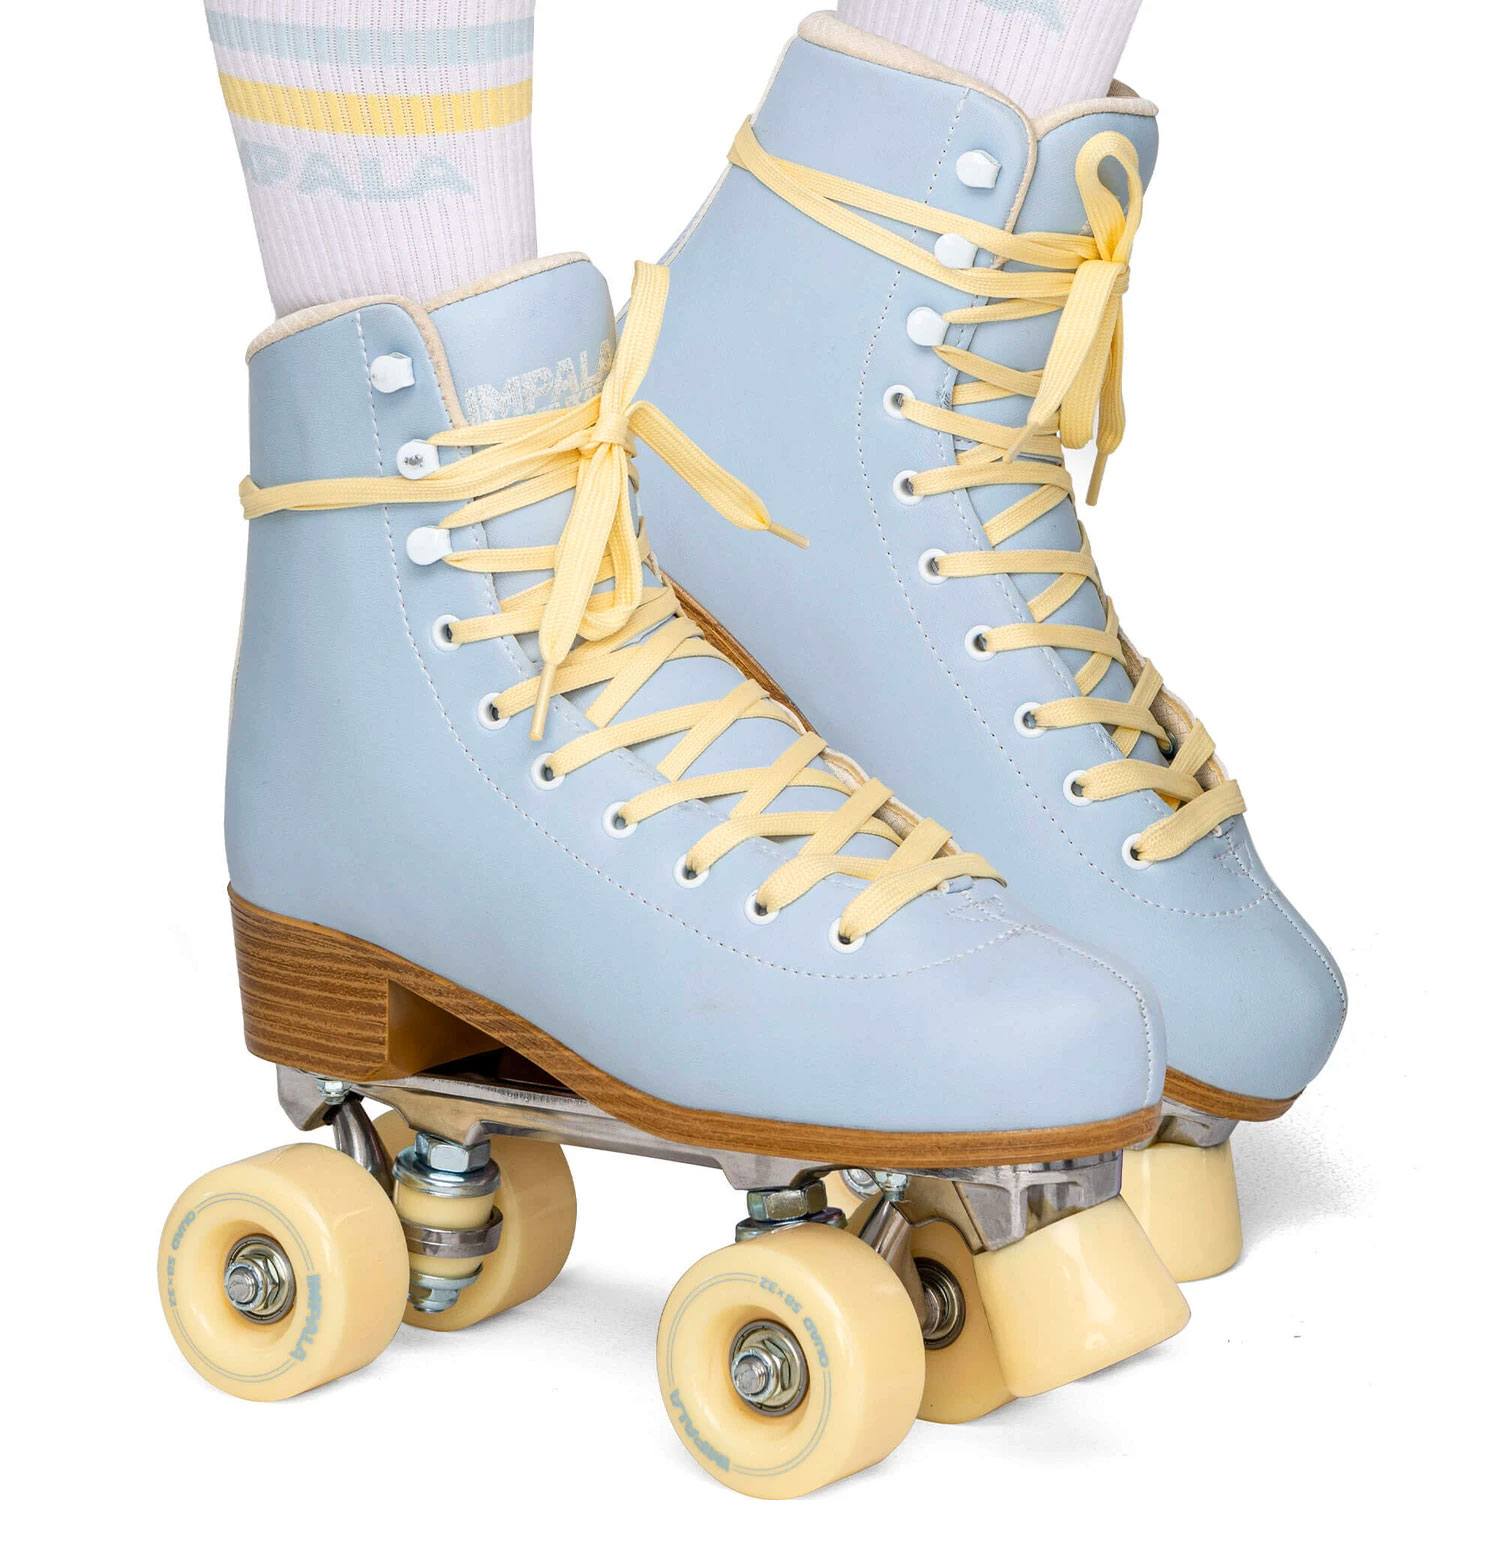 Impala Sidewalk Skates Rollerskates Quad (sky blue yellow)